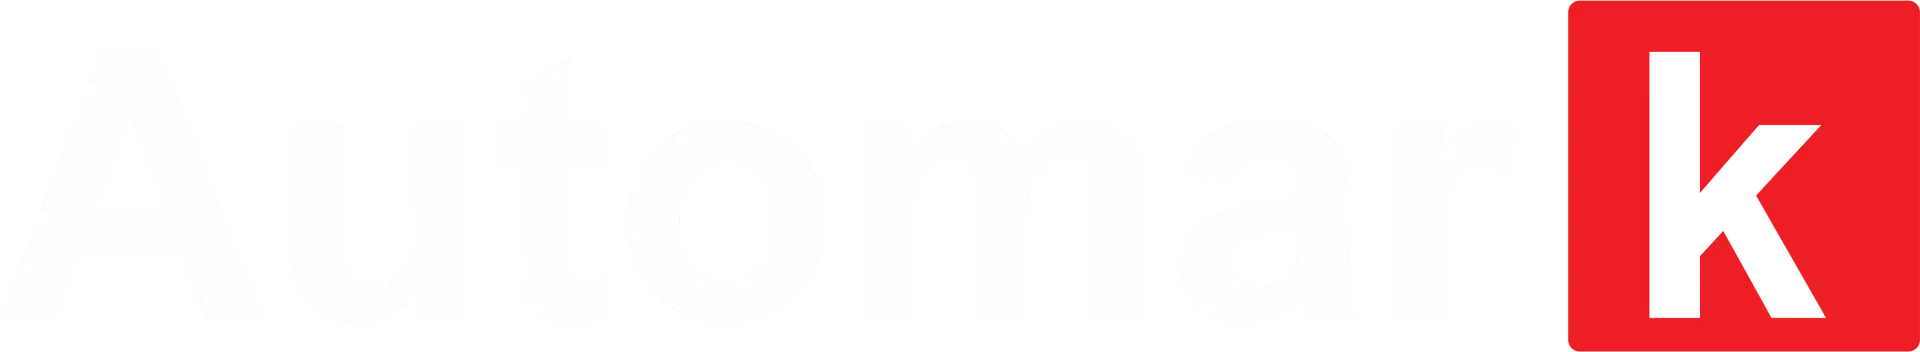 Automark.pt logo - Início